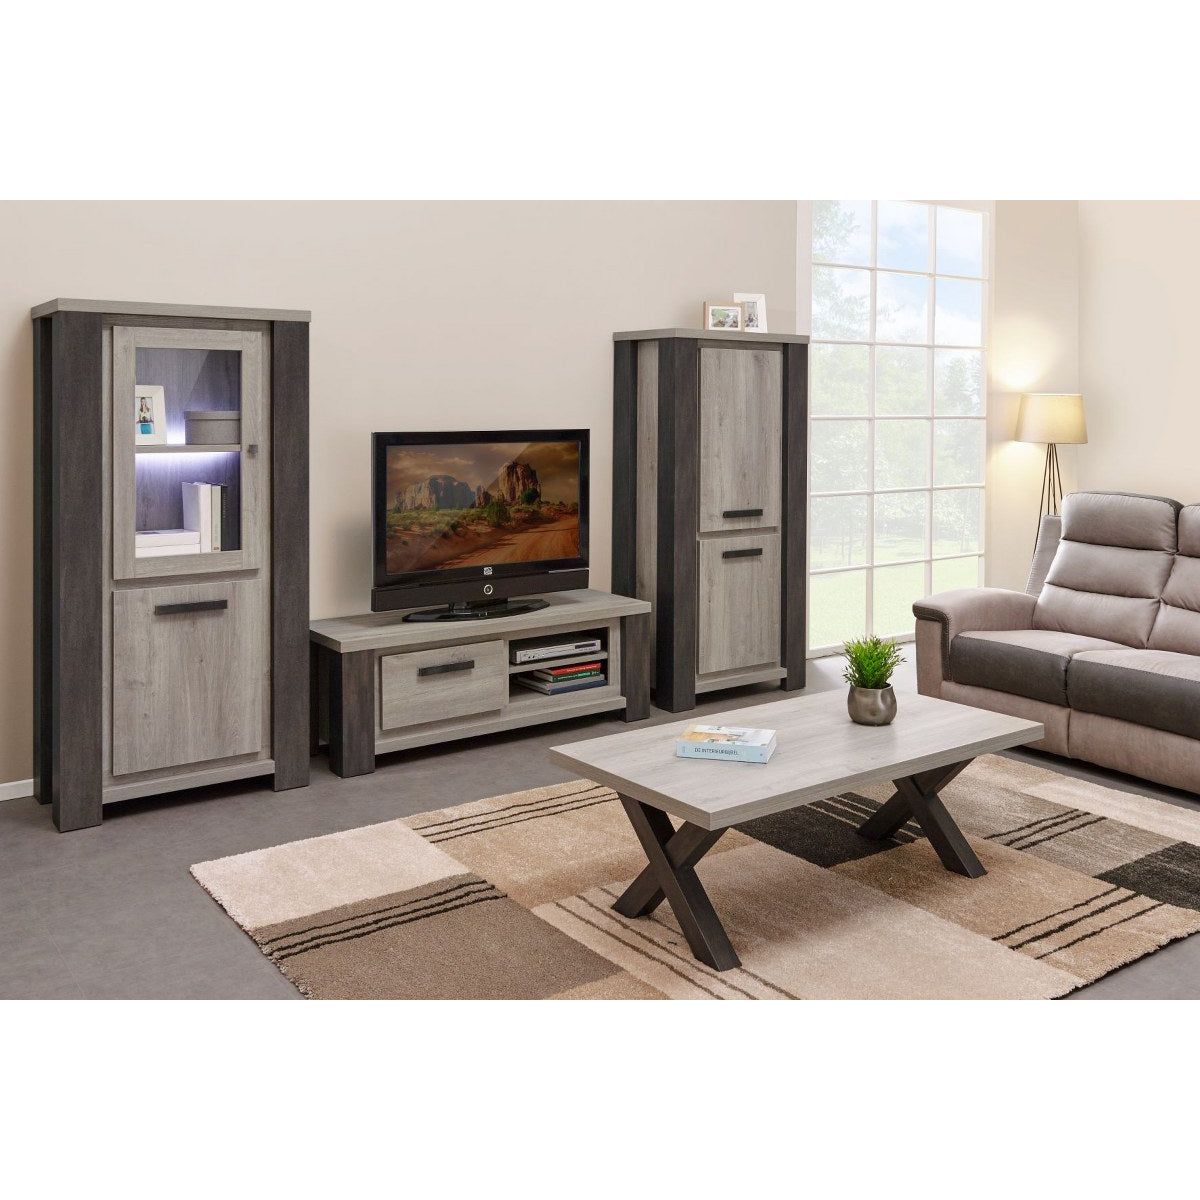 Wall cabinet | Furniture series Annatheo | natural, gray, black |